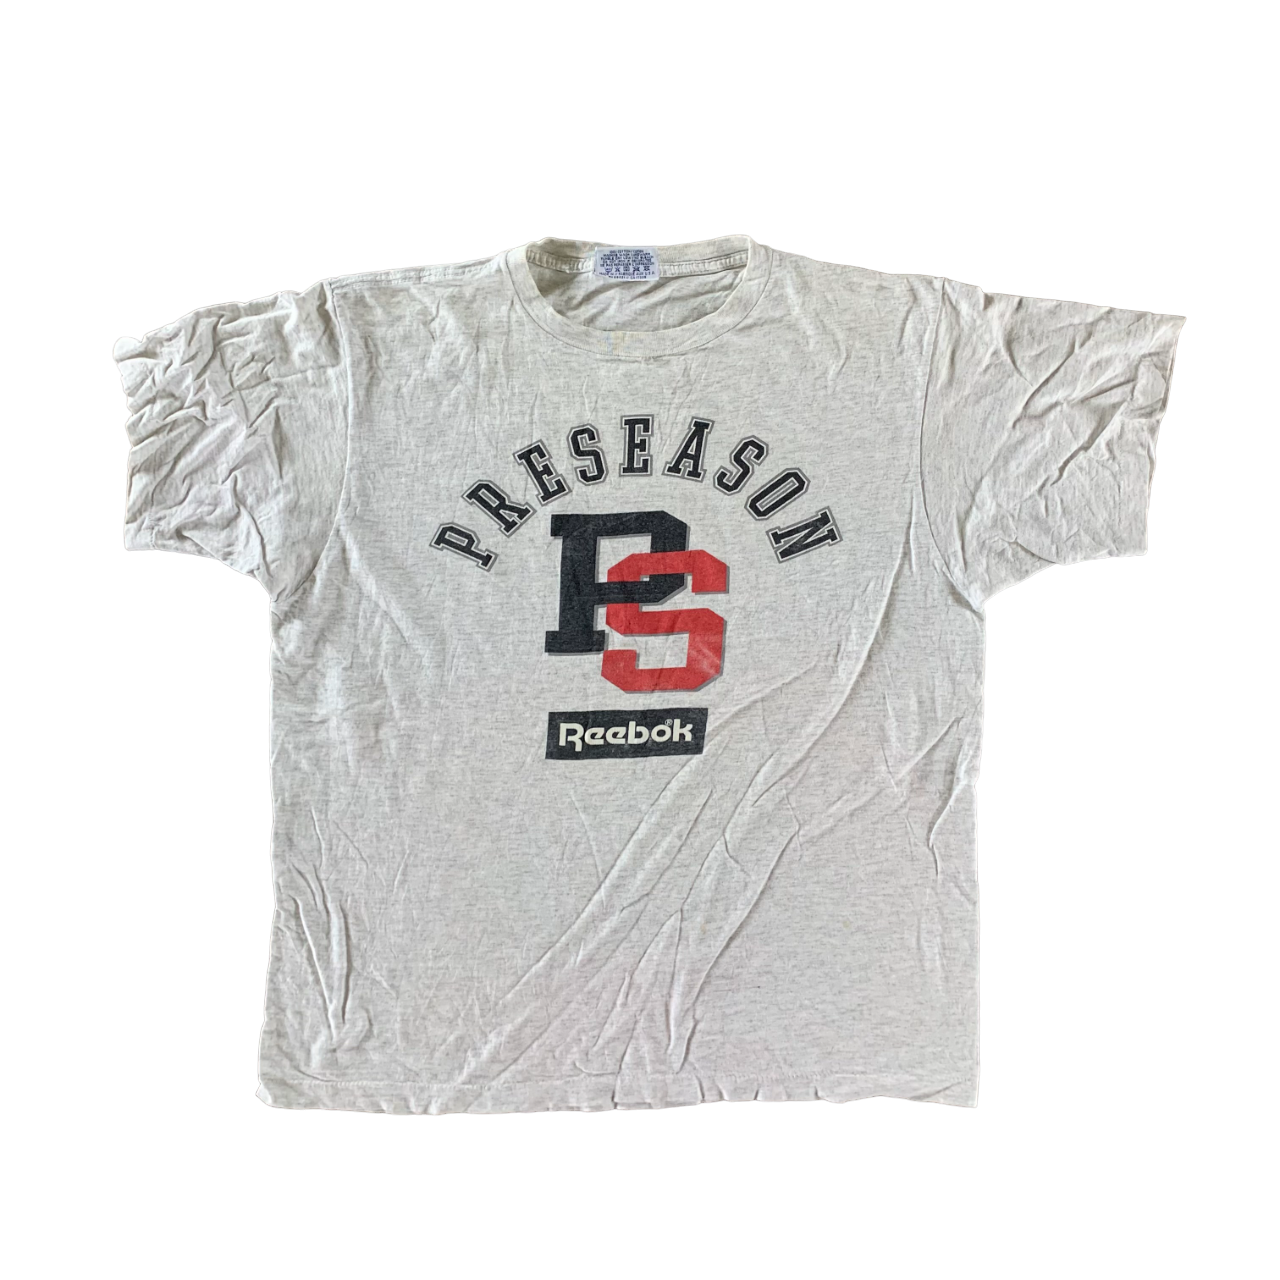 Vintage 1990s Reebok Texas T-shirt size Large